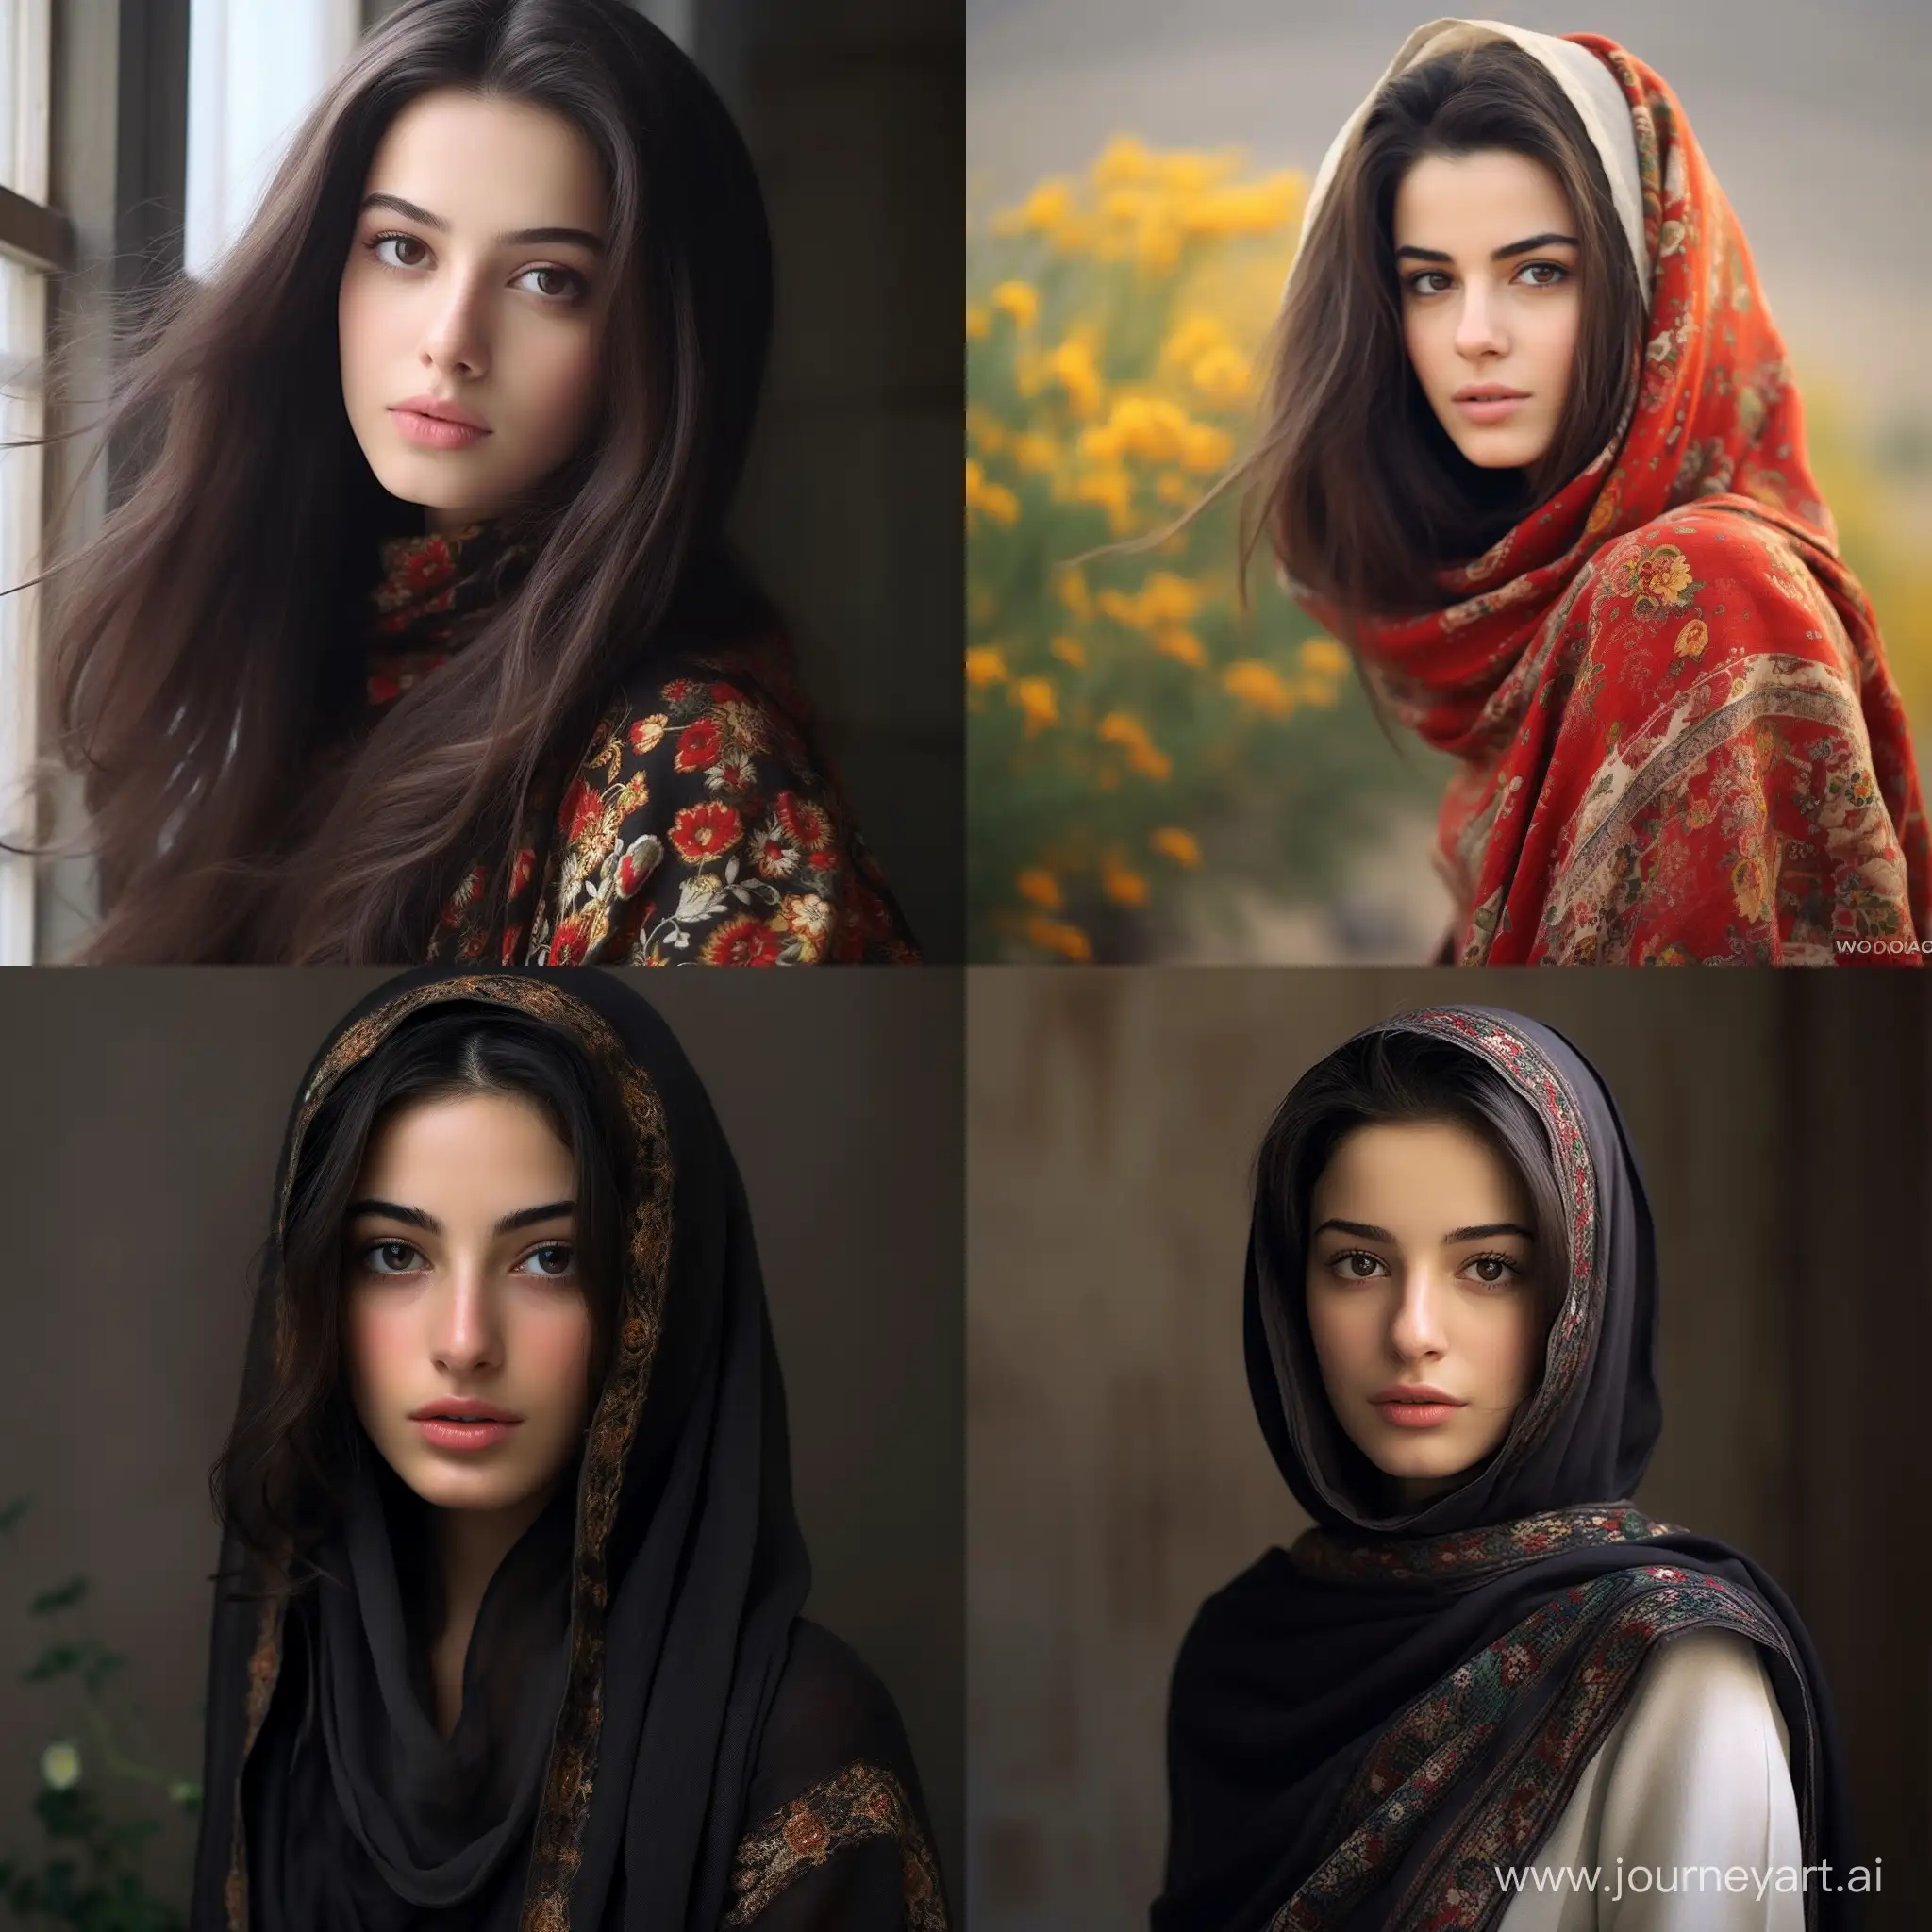 A cute Iranian model 